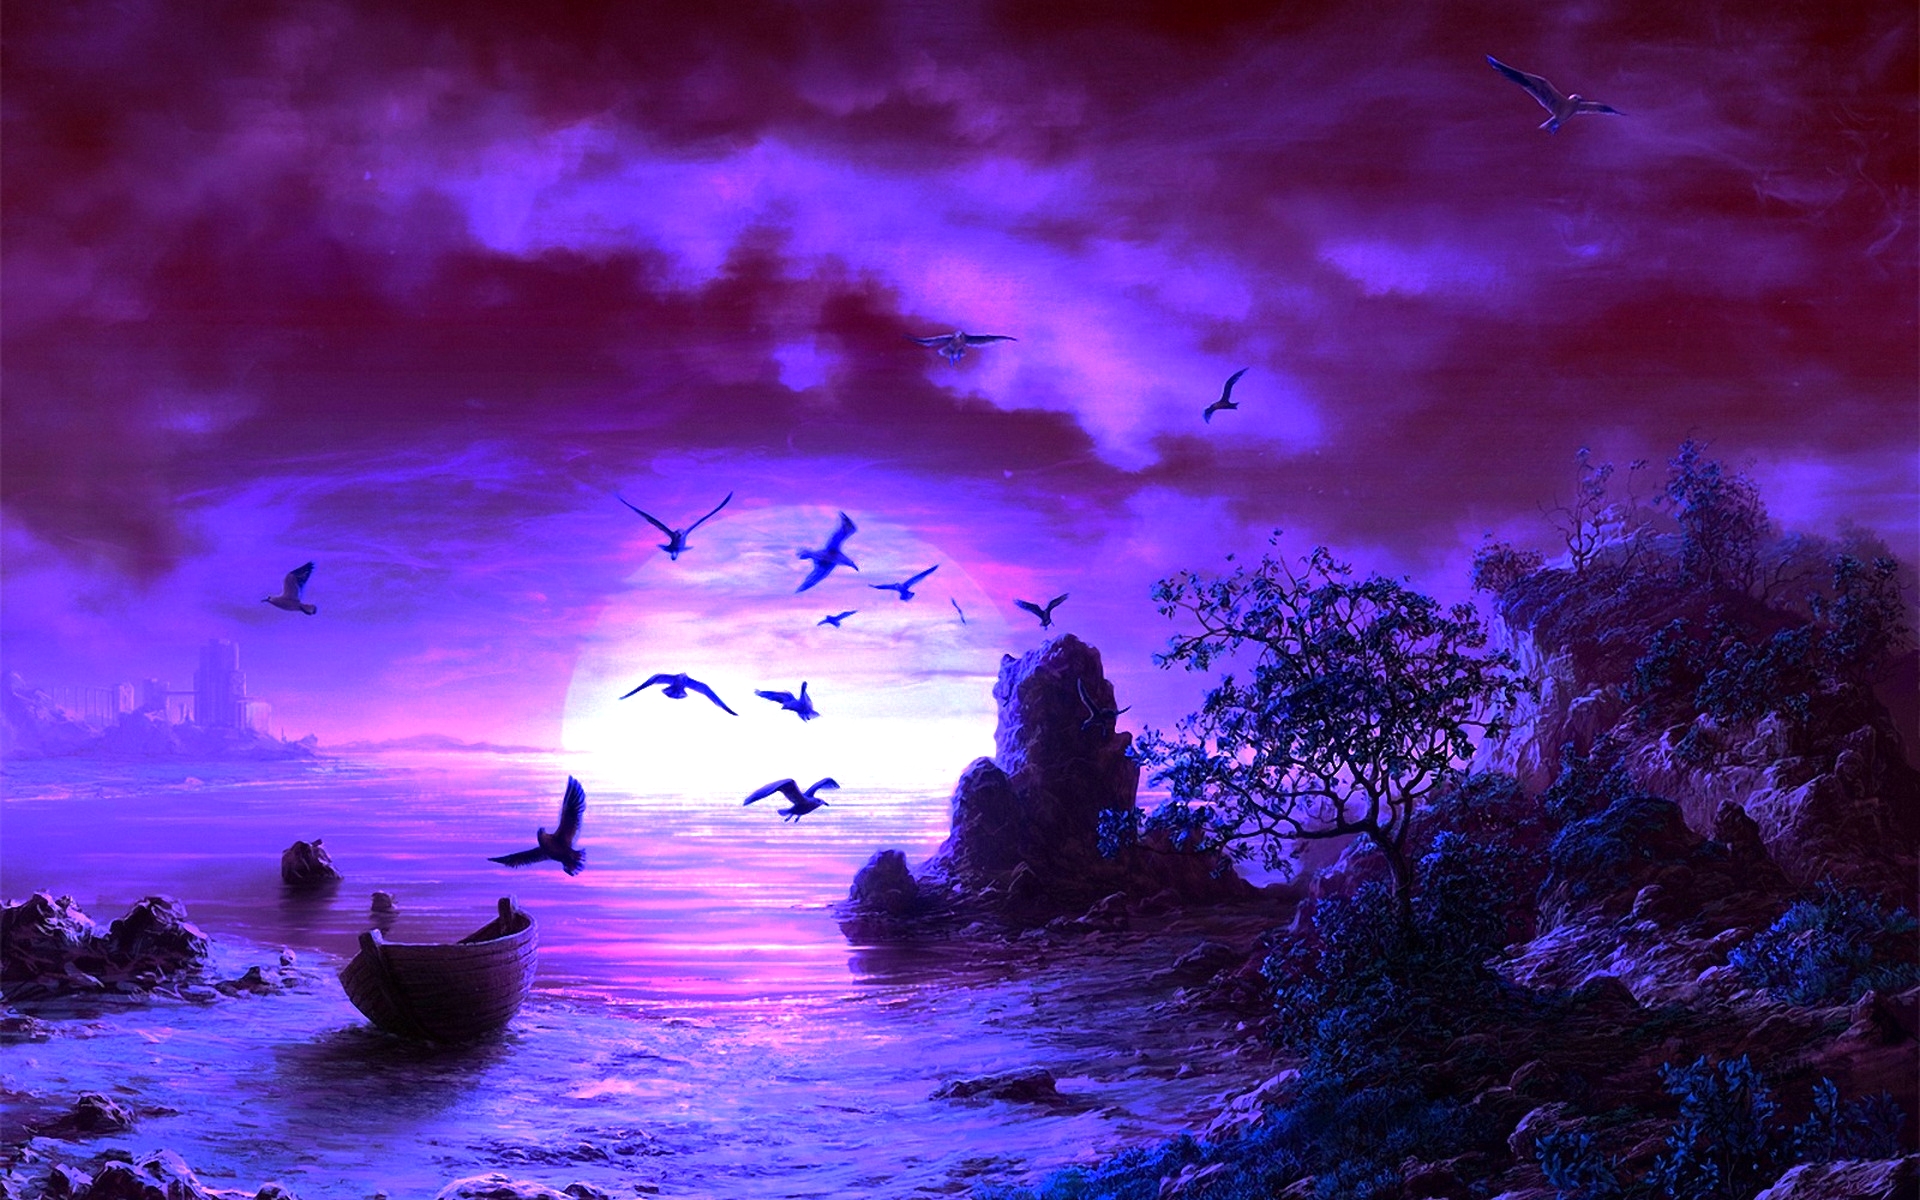 Purple Fantasy Backgrounds